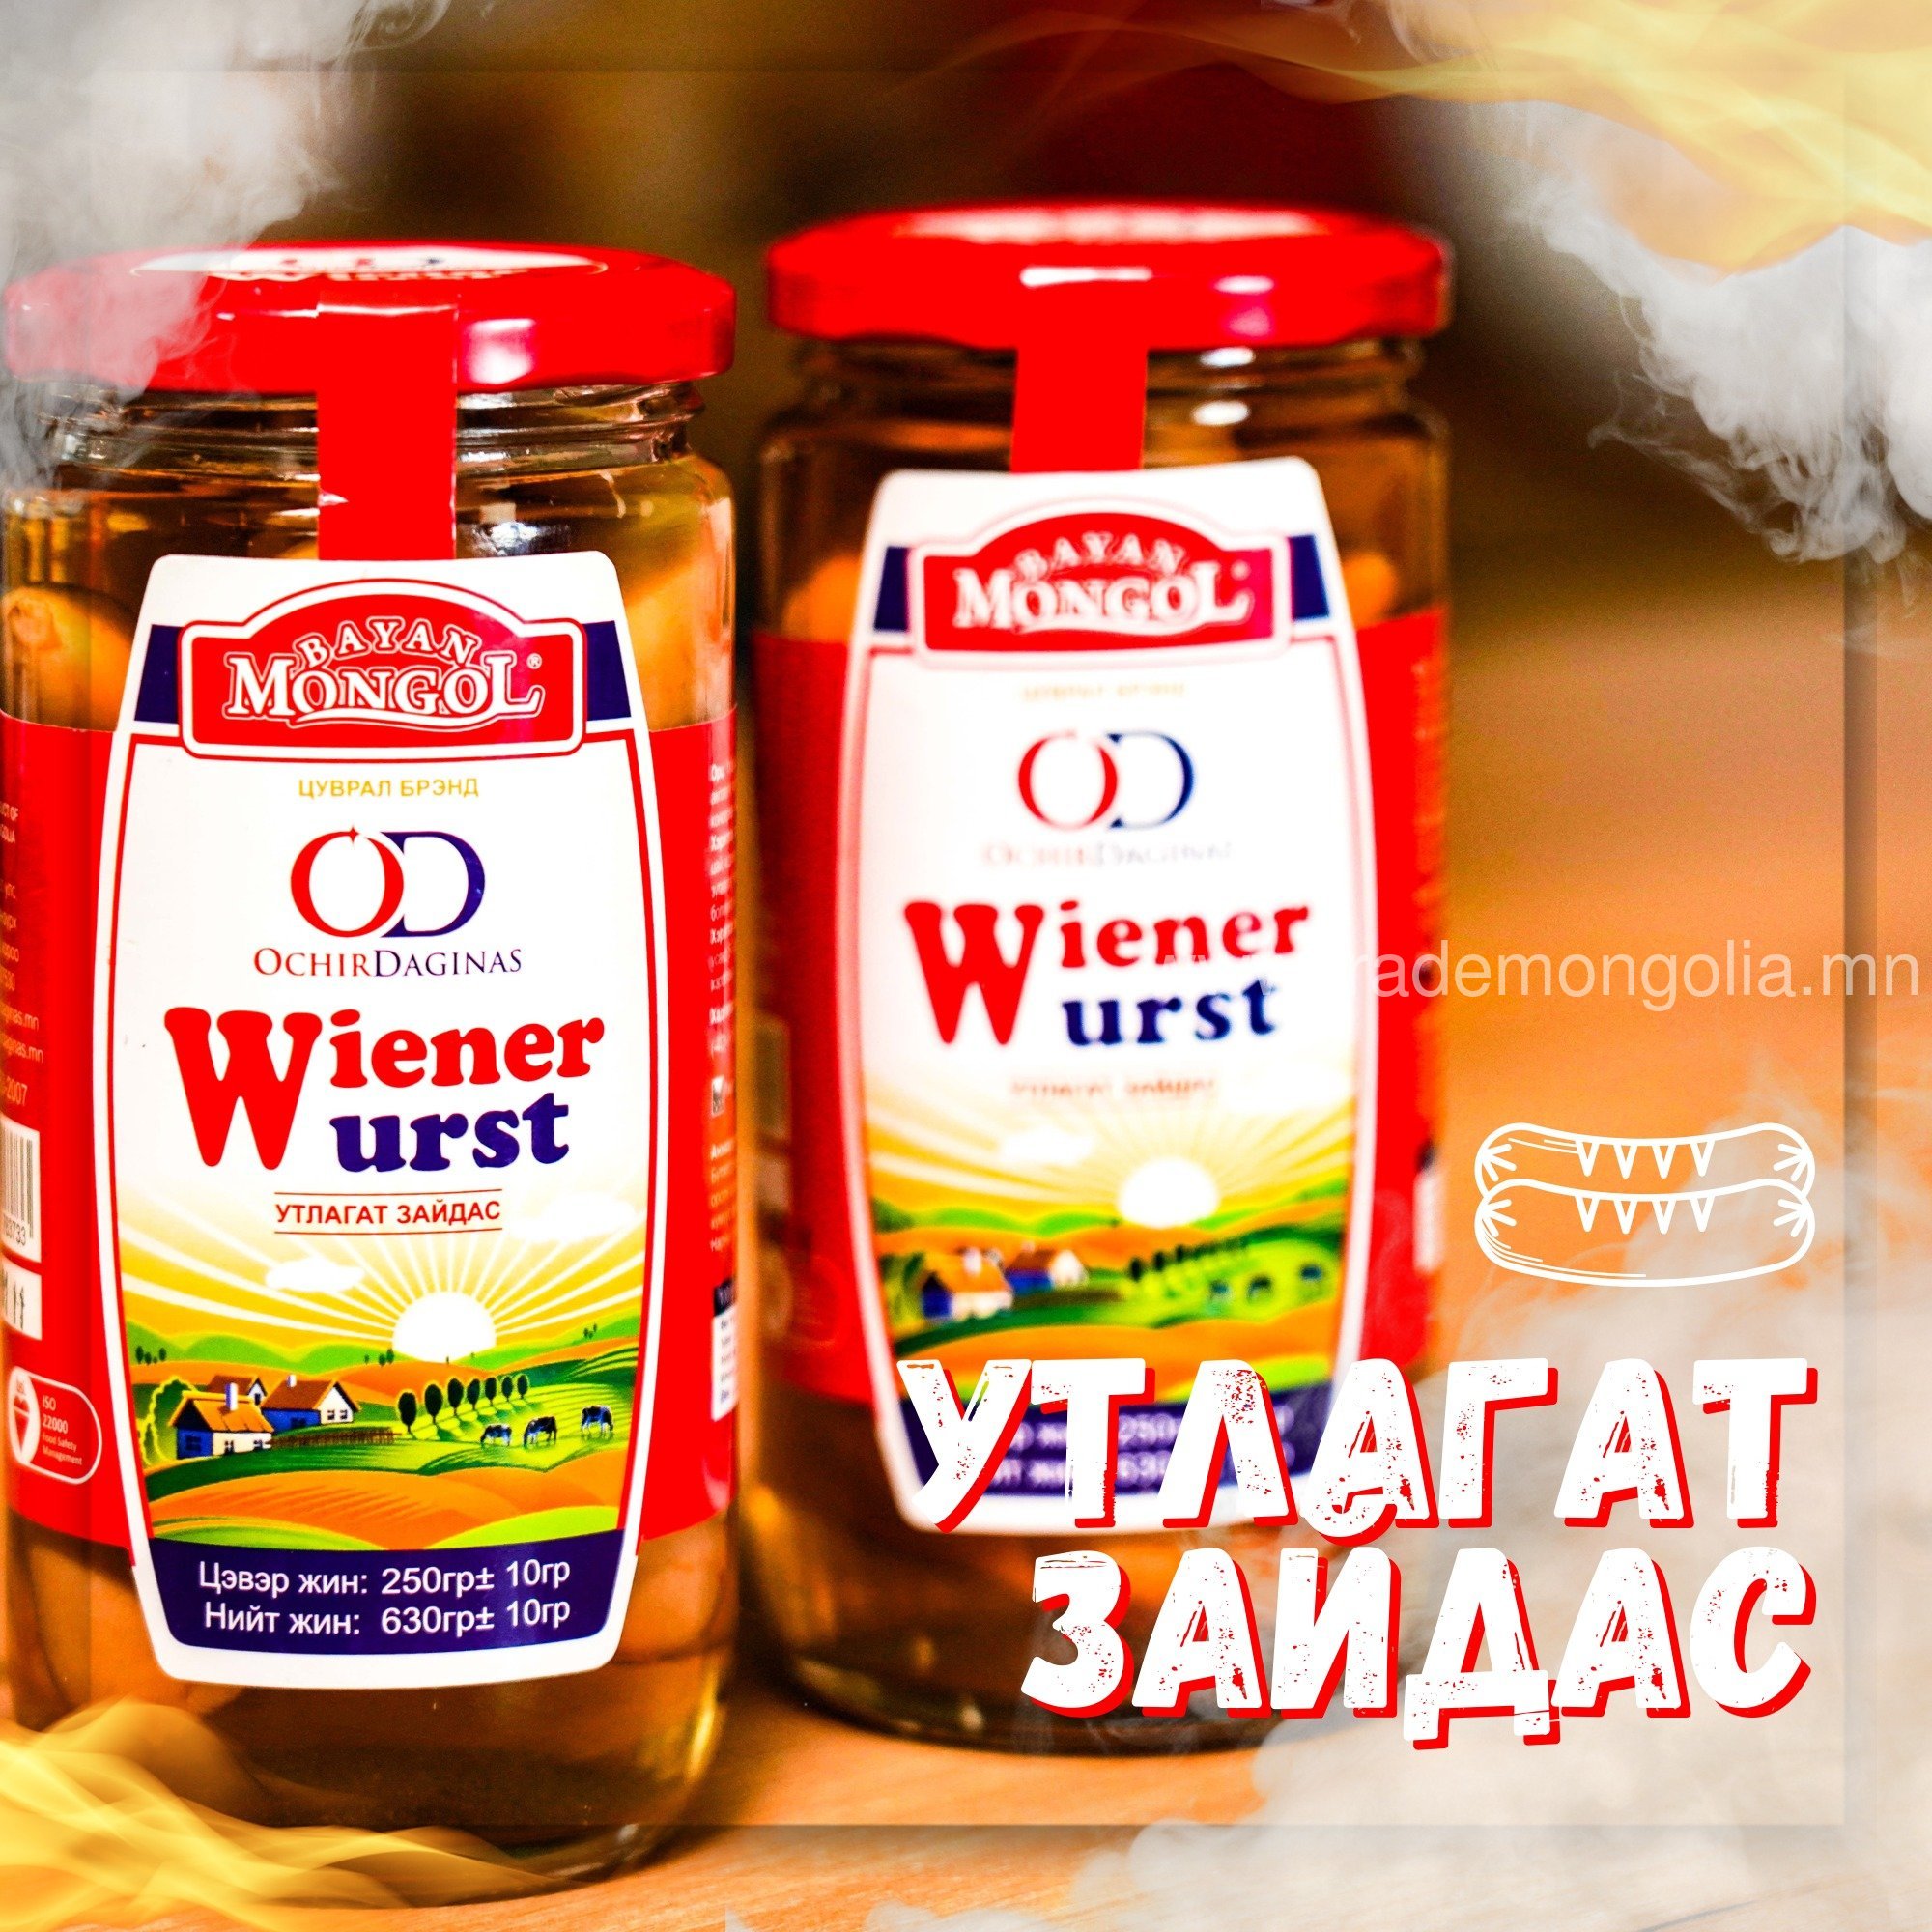 Wiener wurst - Утлагат зайдас